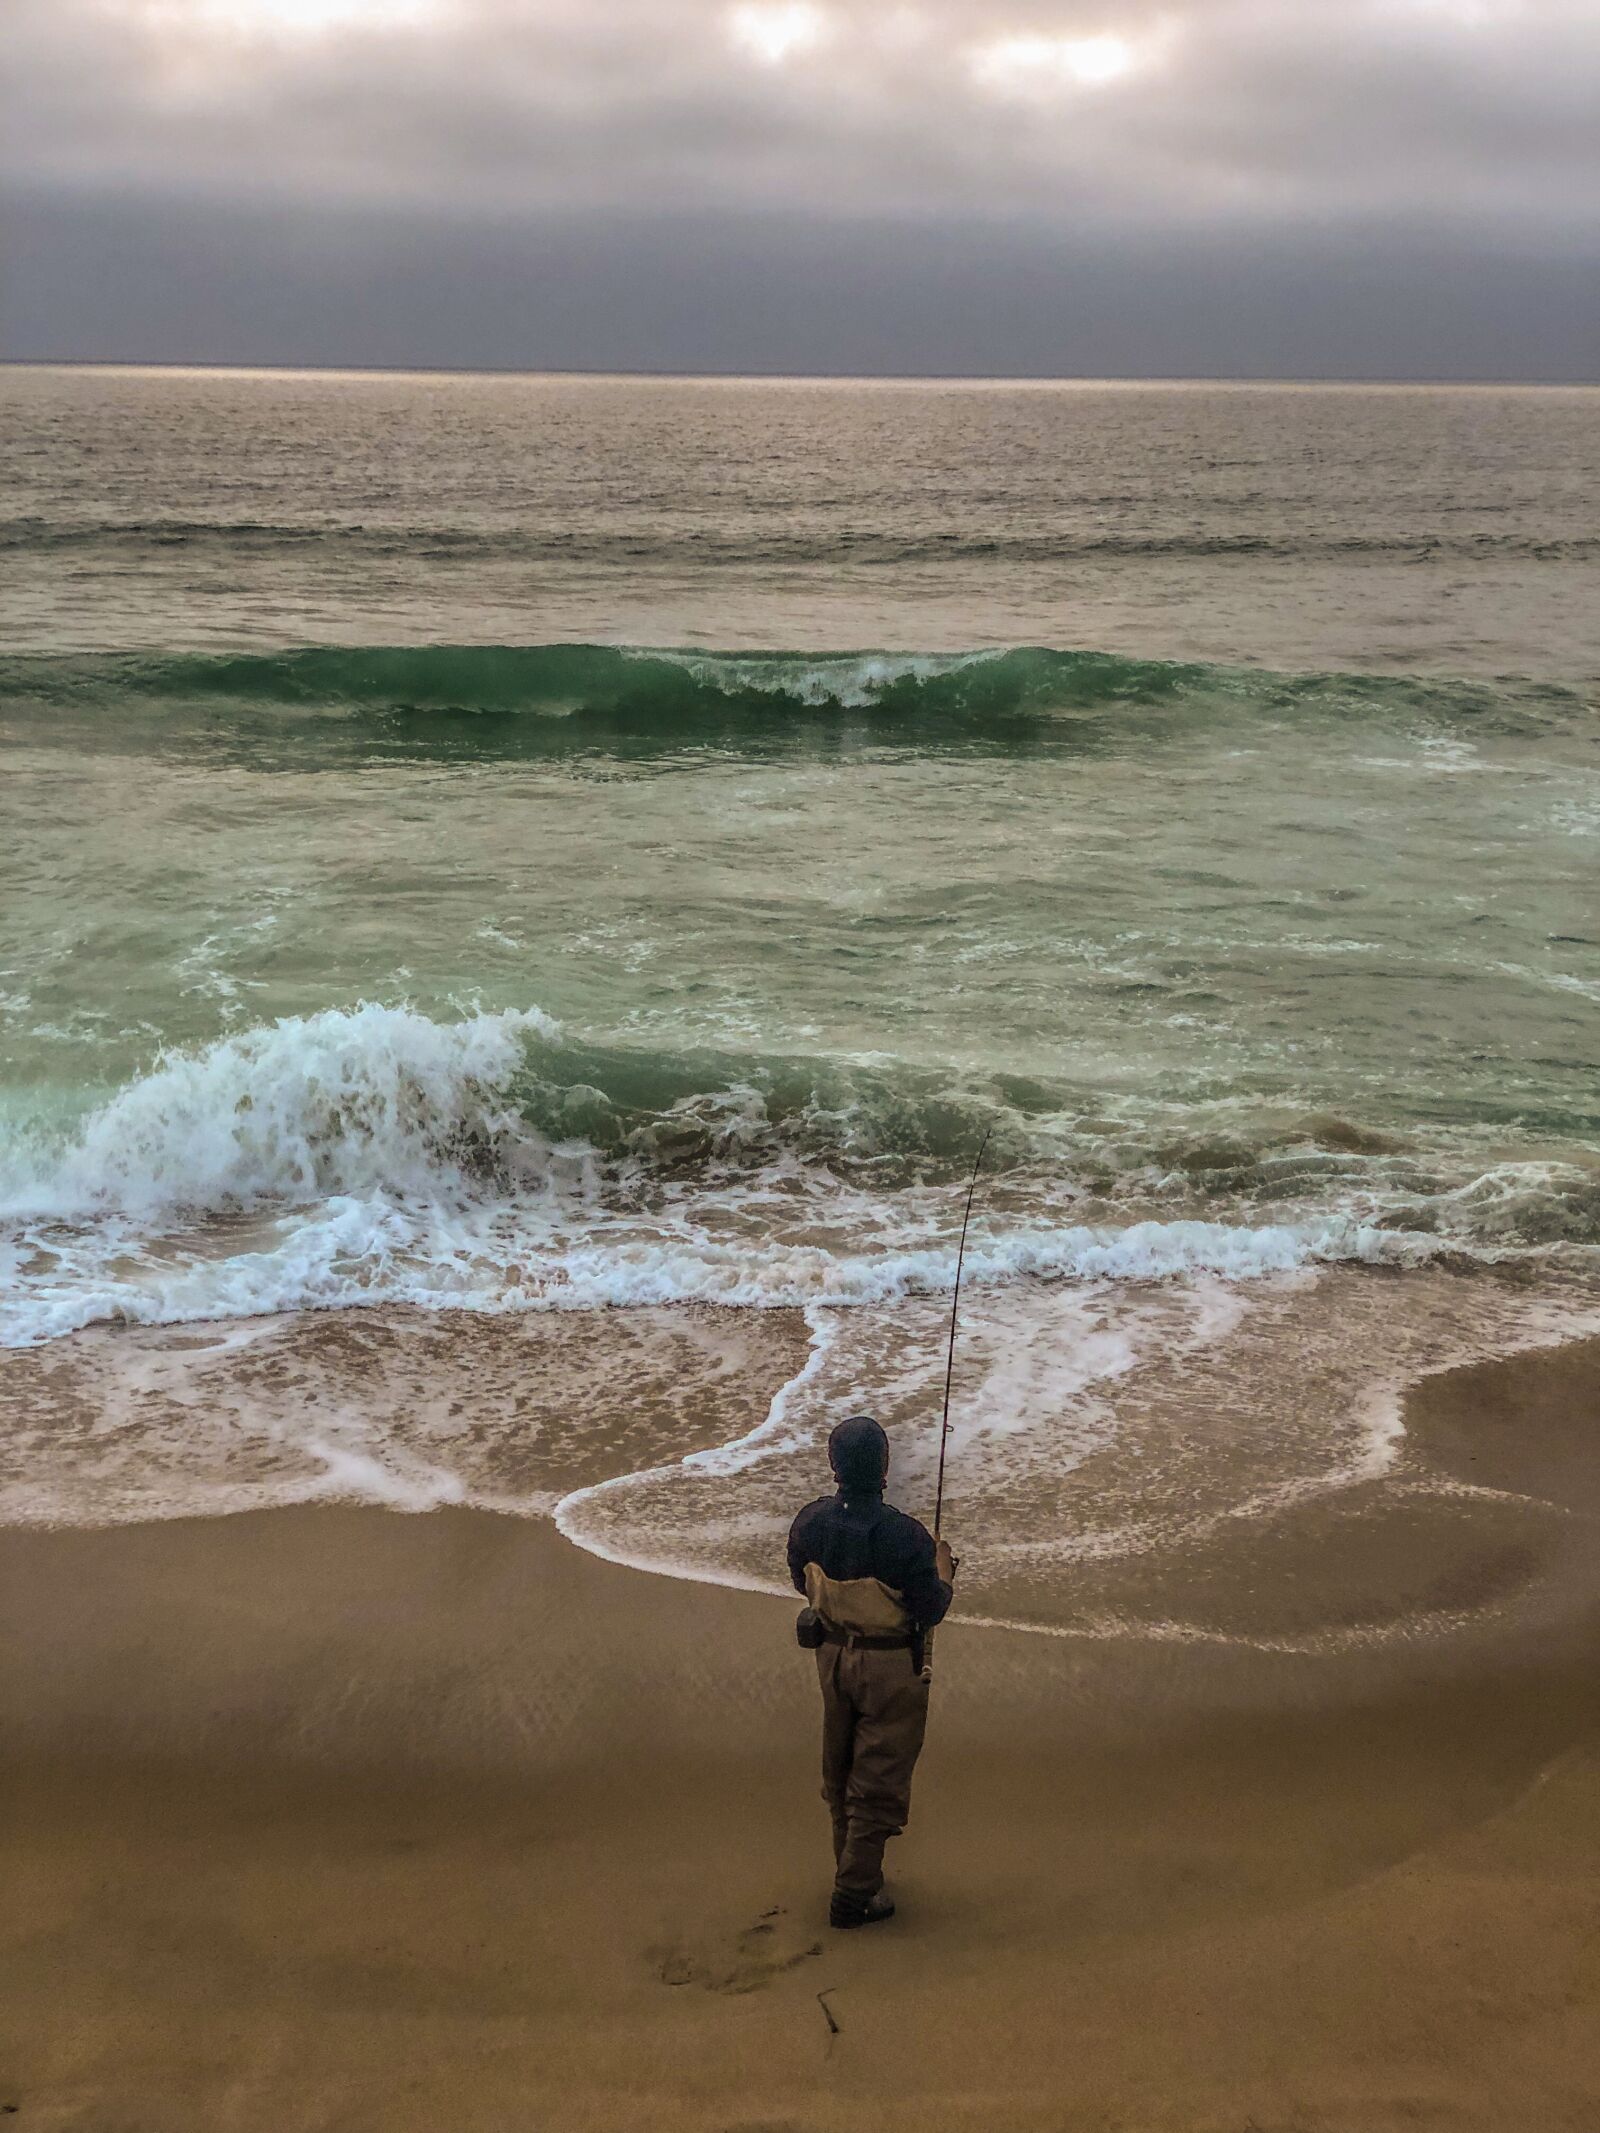 iPhone X back dual camera 6mm f/2.4 sample photo. Fishing, sea, ocean photography